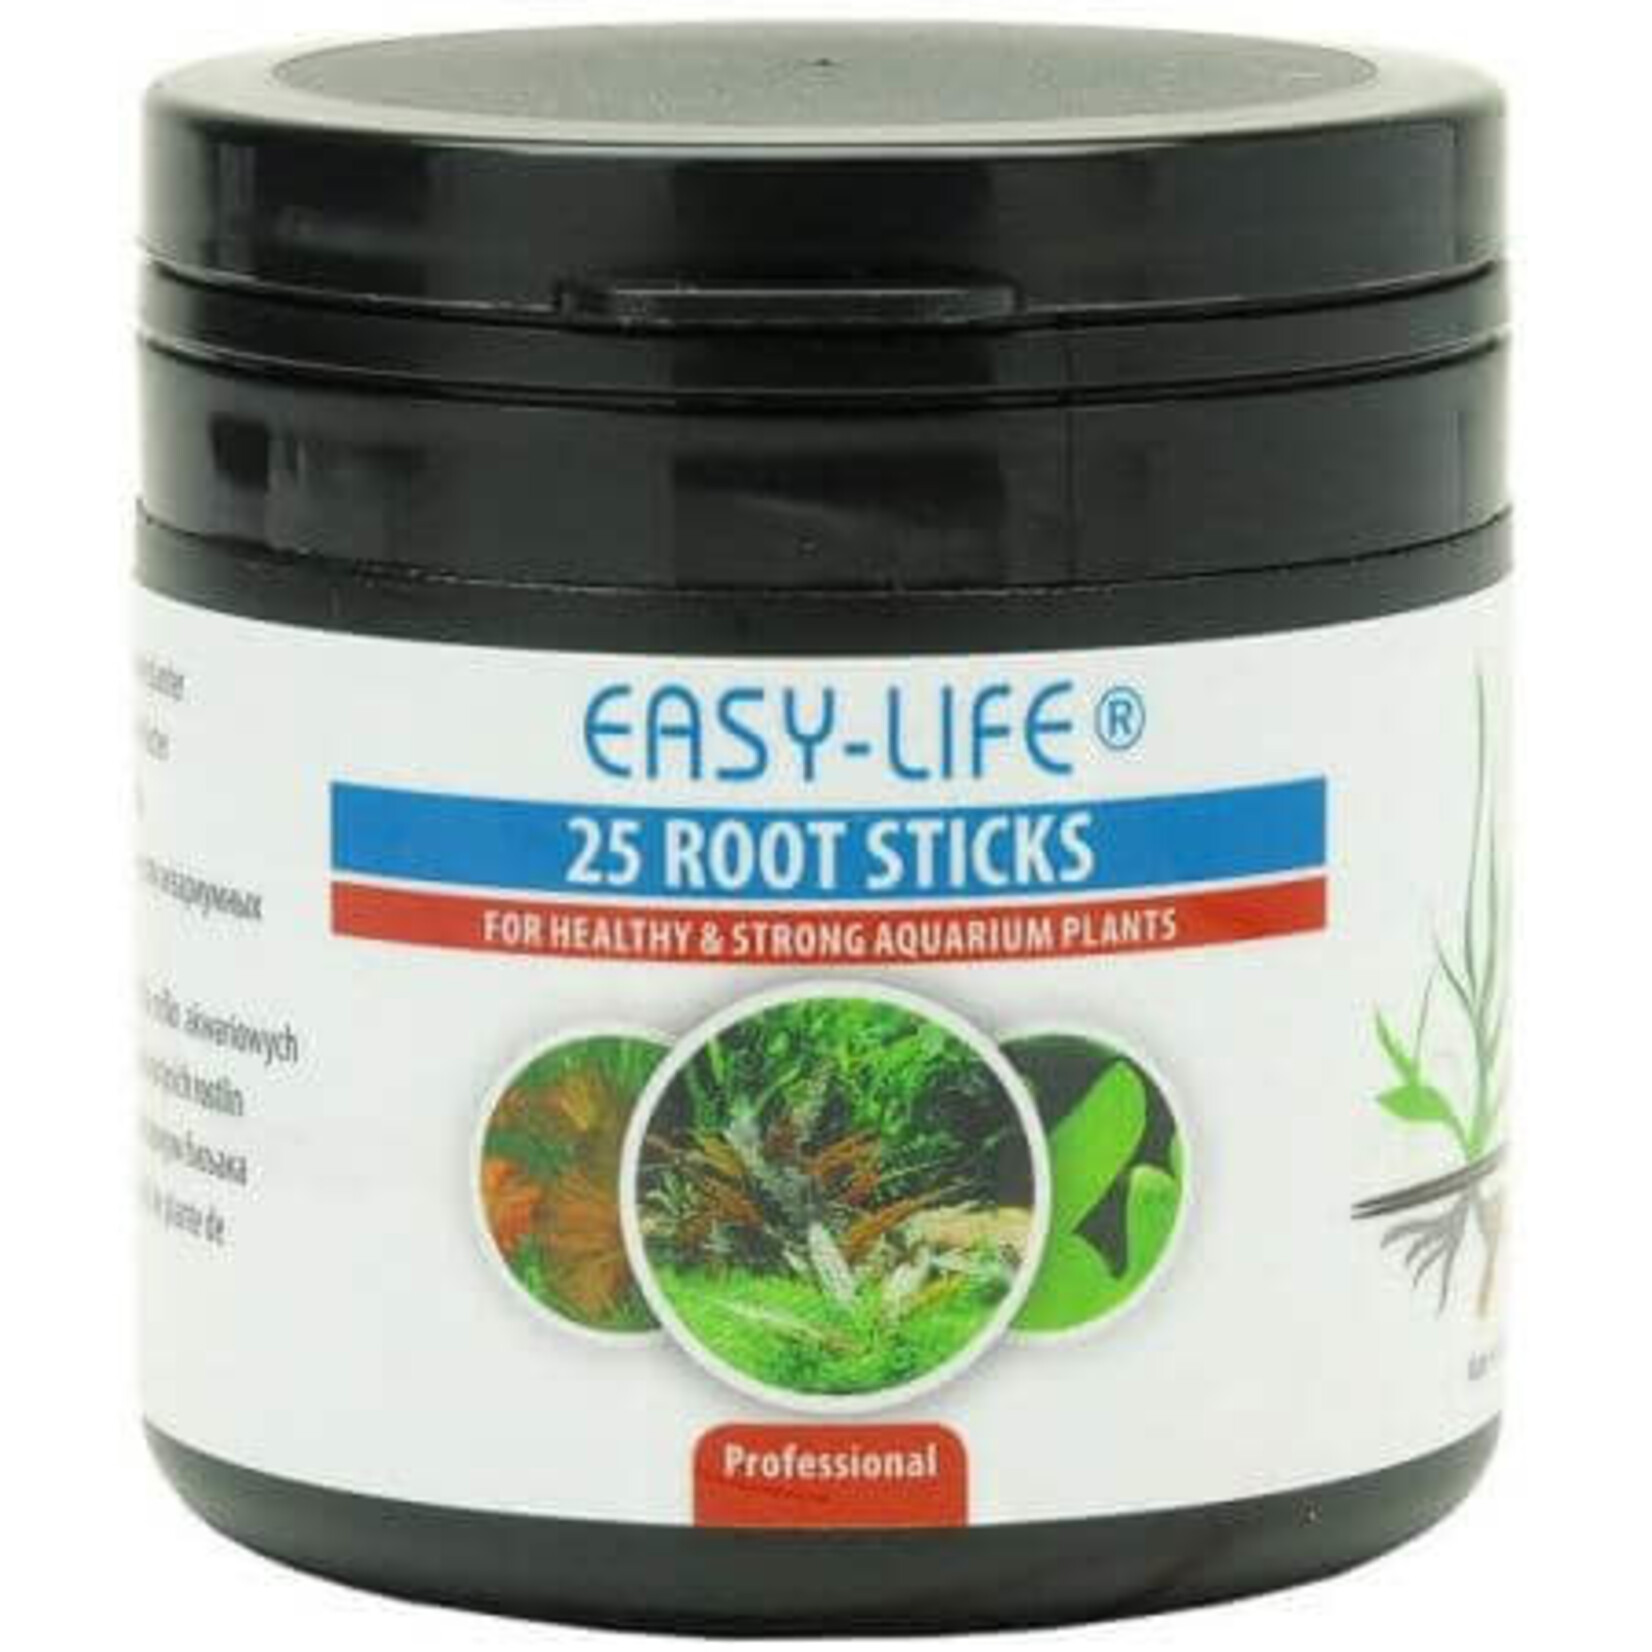 Easy Life Easy life Root sticks (25 sticks per pot)